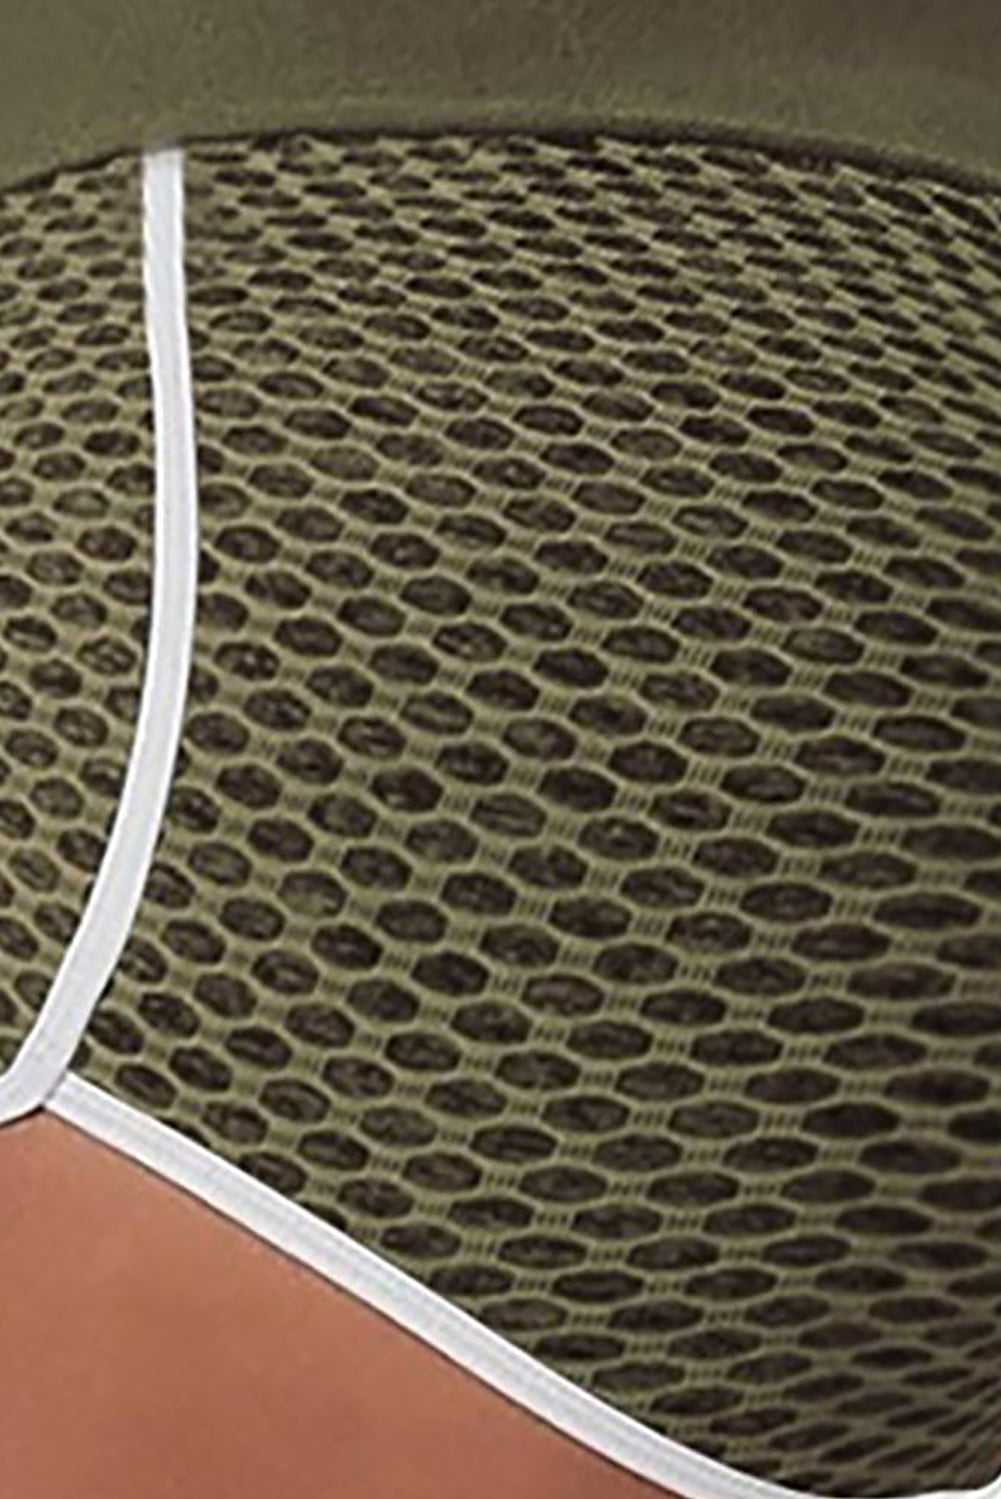 Burgundy High Waist Honeycomb Contrast Stripes Butt Lifting Yoga Shorts